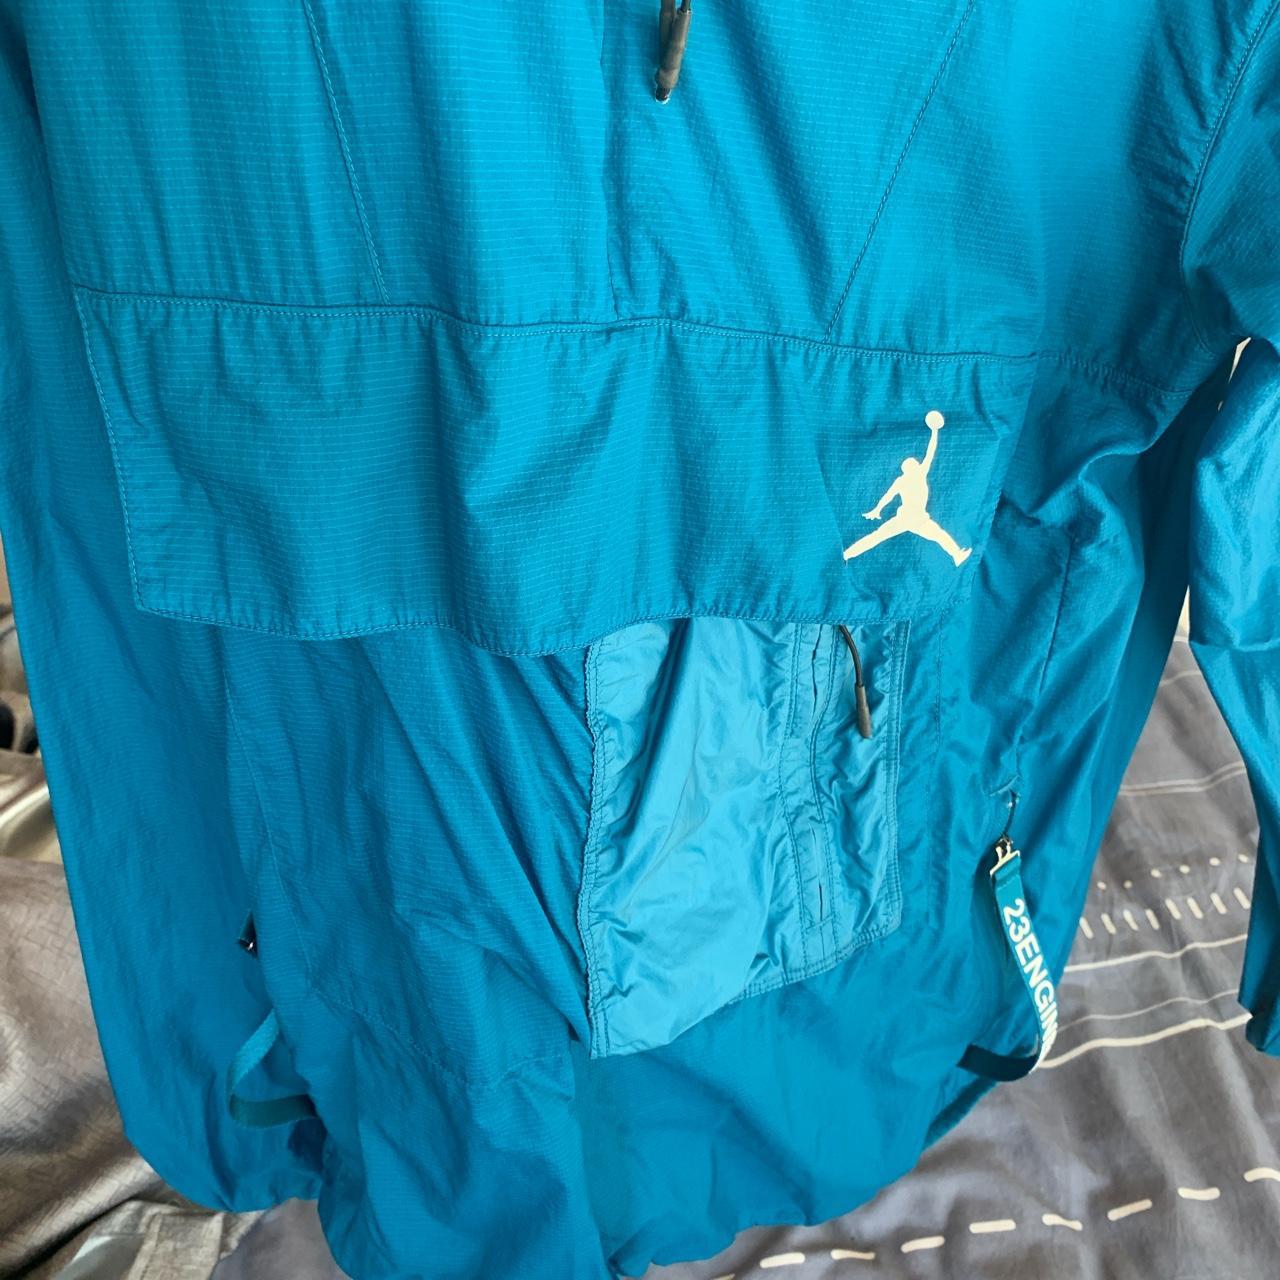 Jordan half zip jacket size small #jordan #blue - Depop